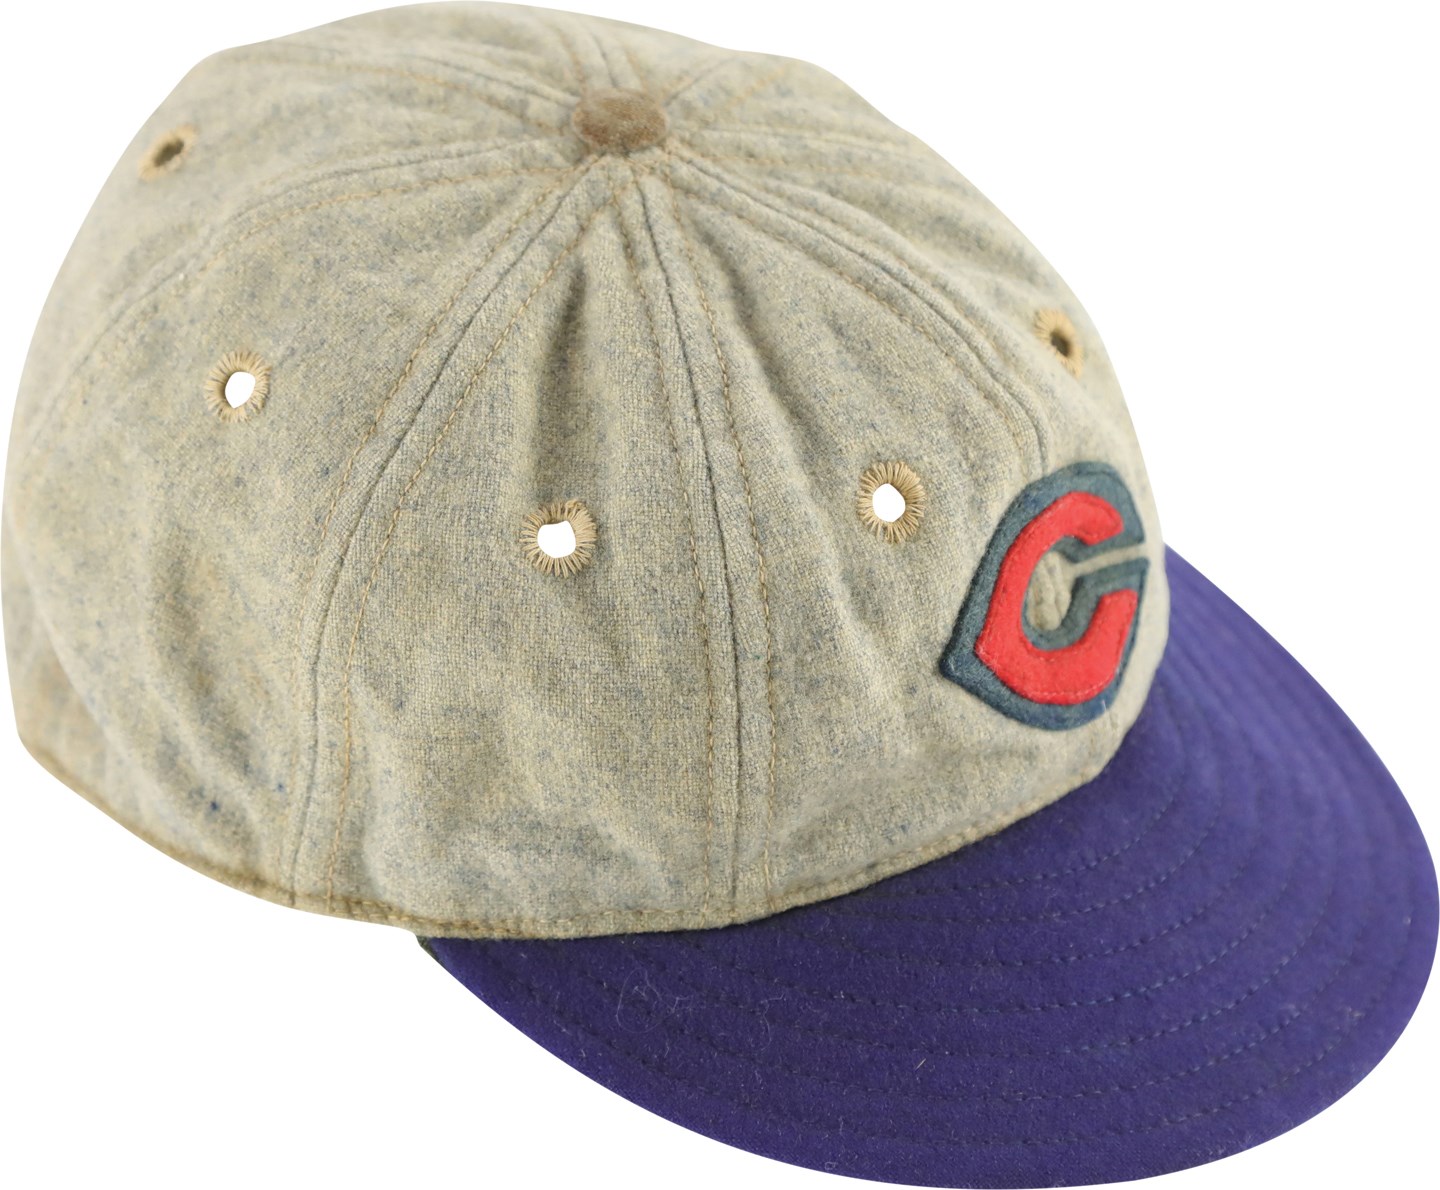 - 1935-36 Cincinnati Reds Game Worn Hat (Two Year Style)